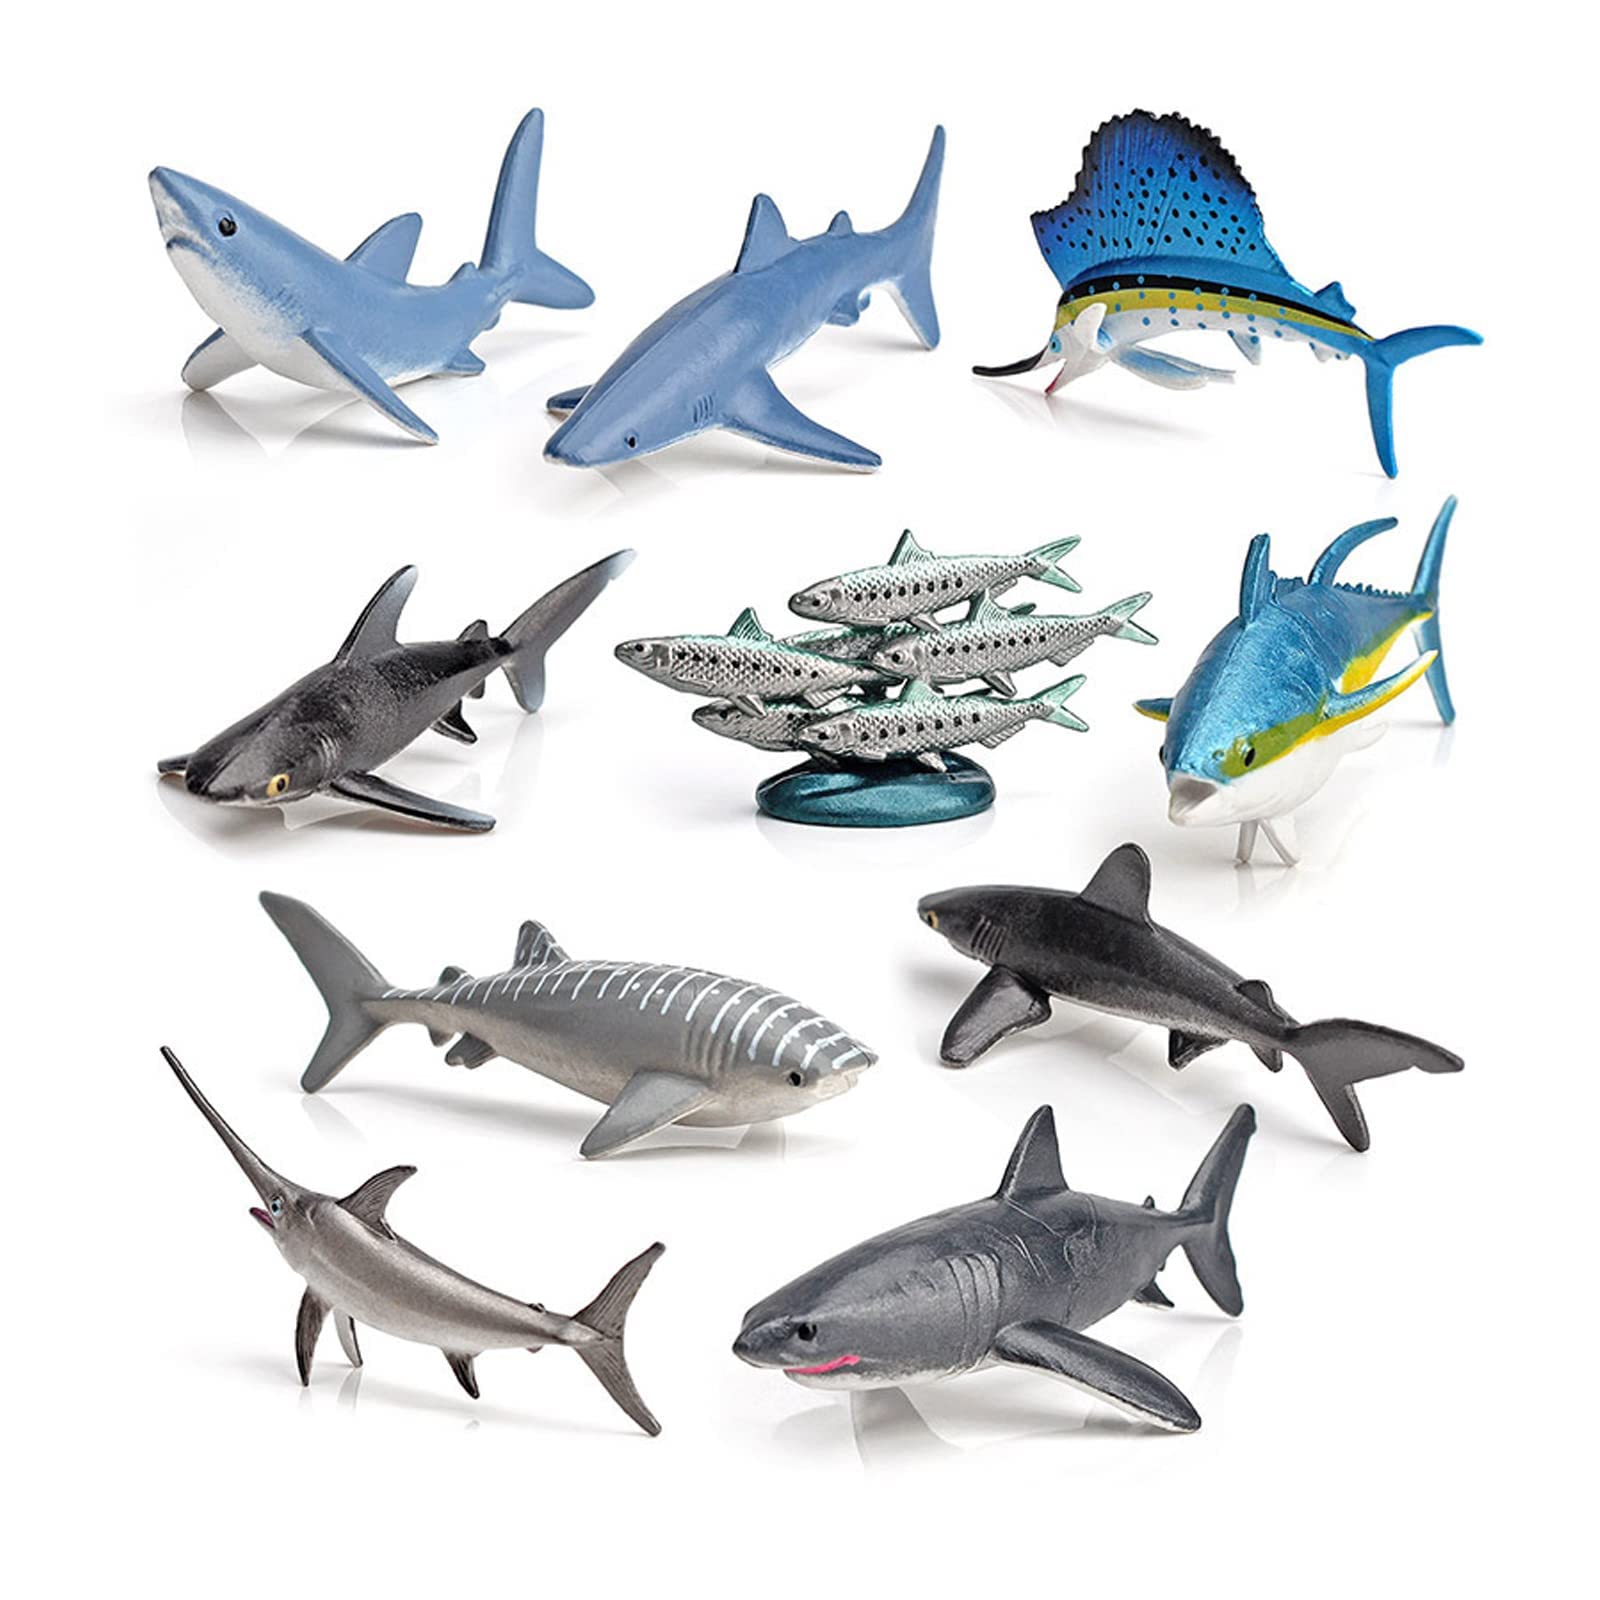 Buy Realistic Mini Sea Creature Figures Toy 10 Pcs Ocean Animal